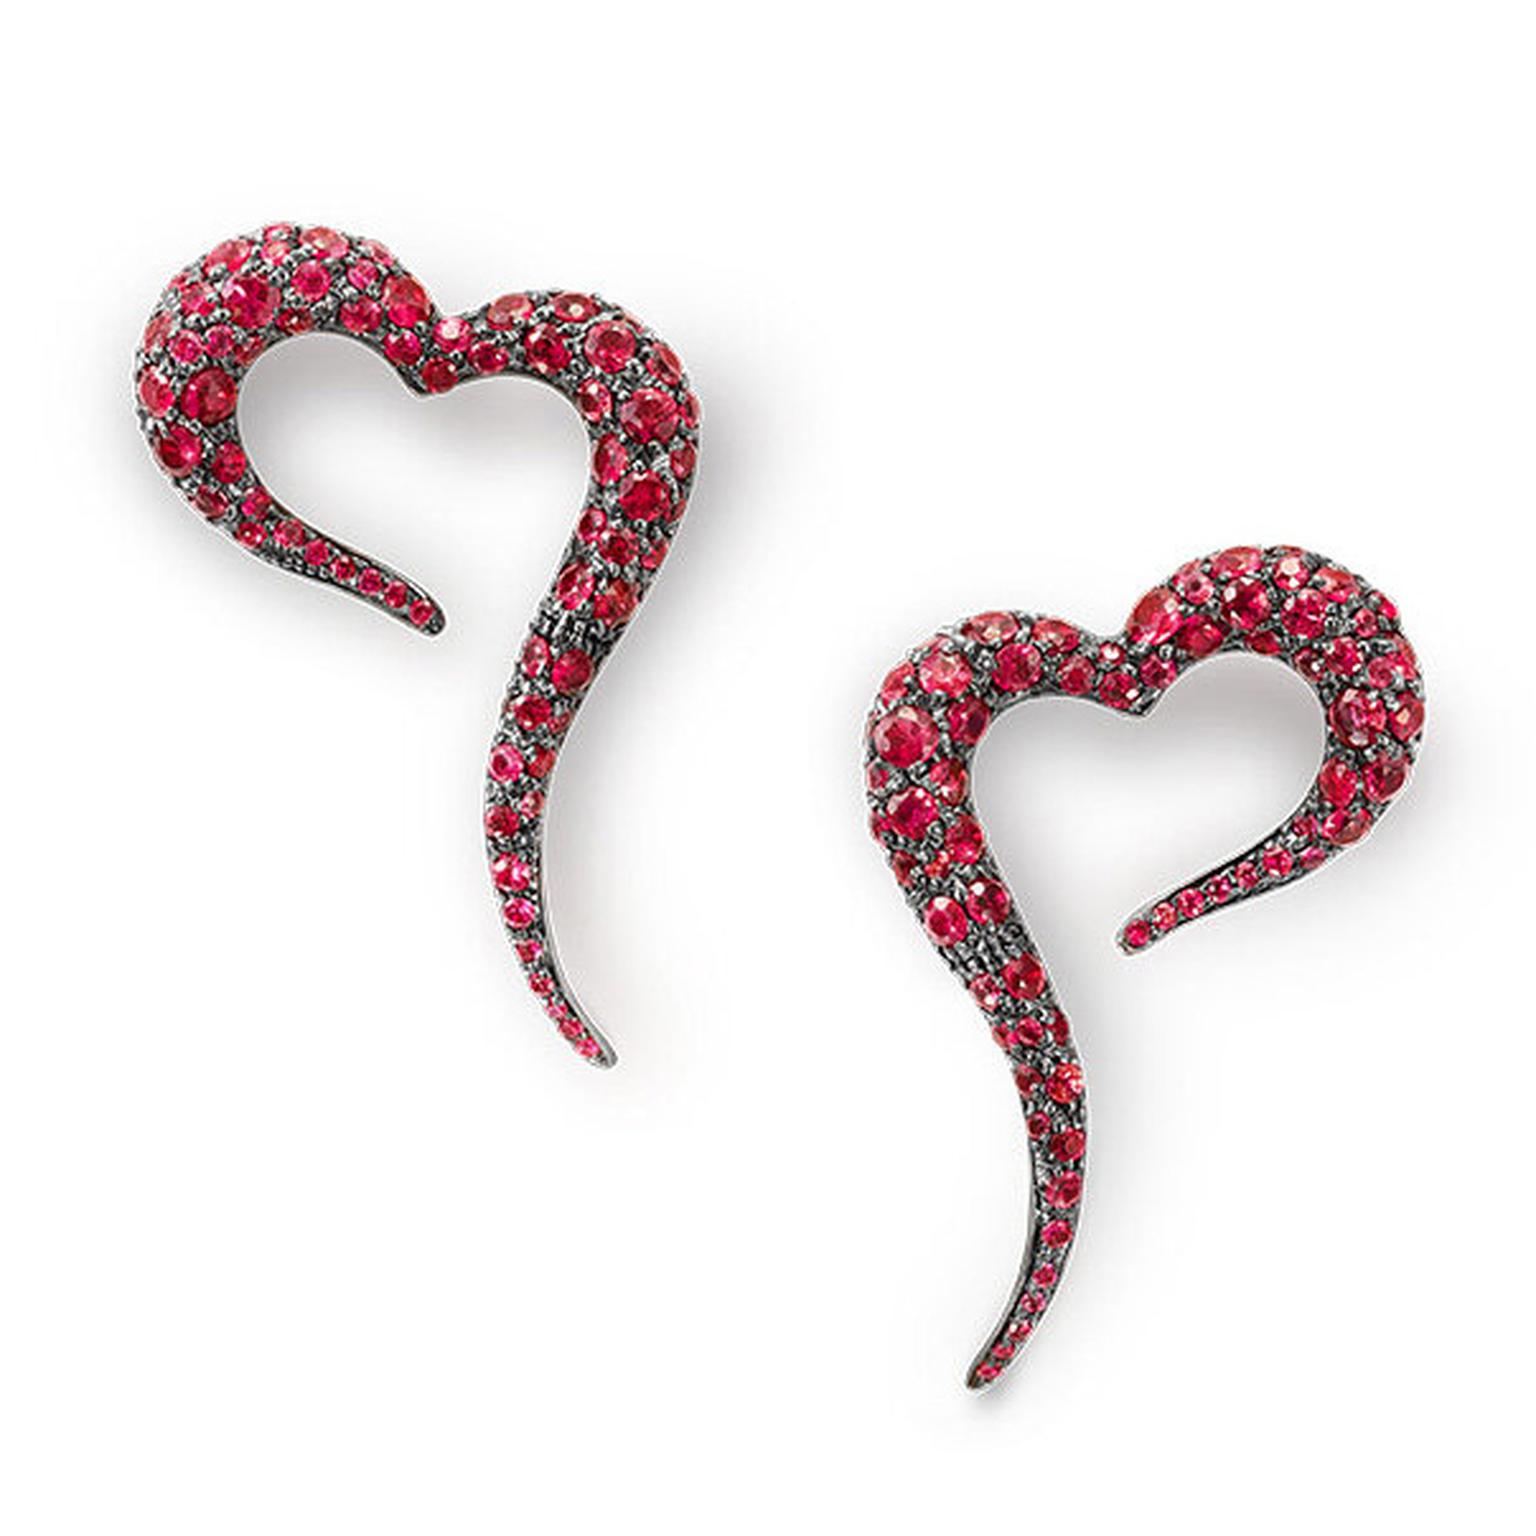 Ruby Heart earrings by Vanleles